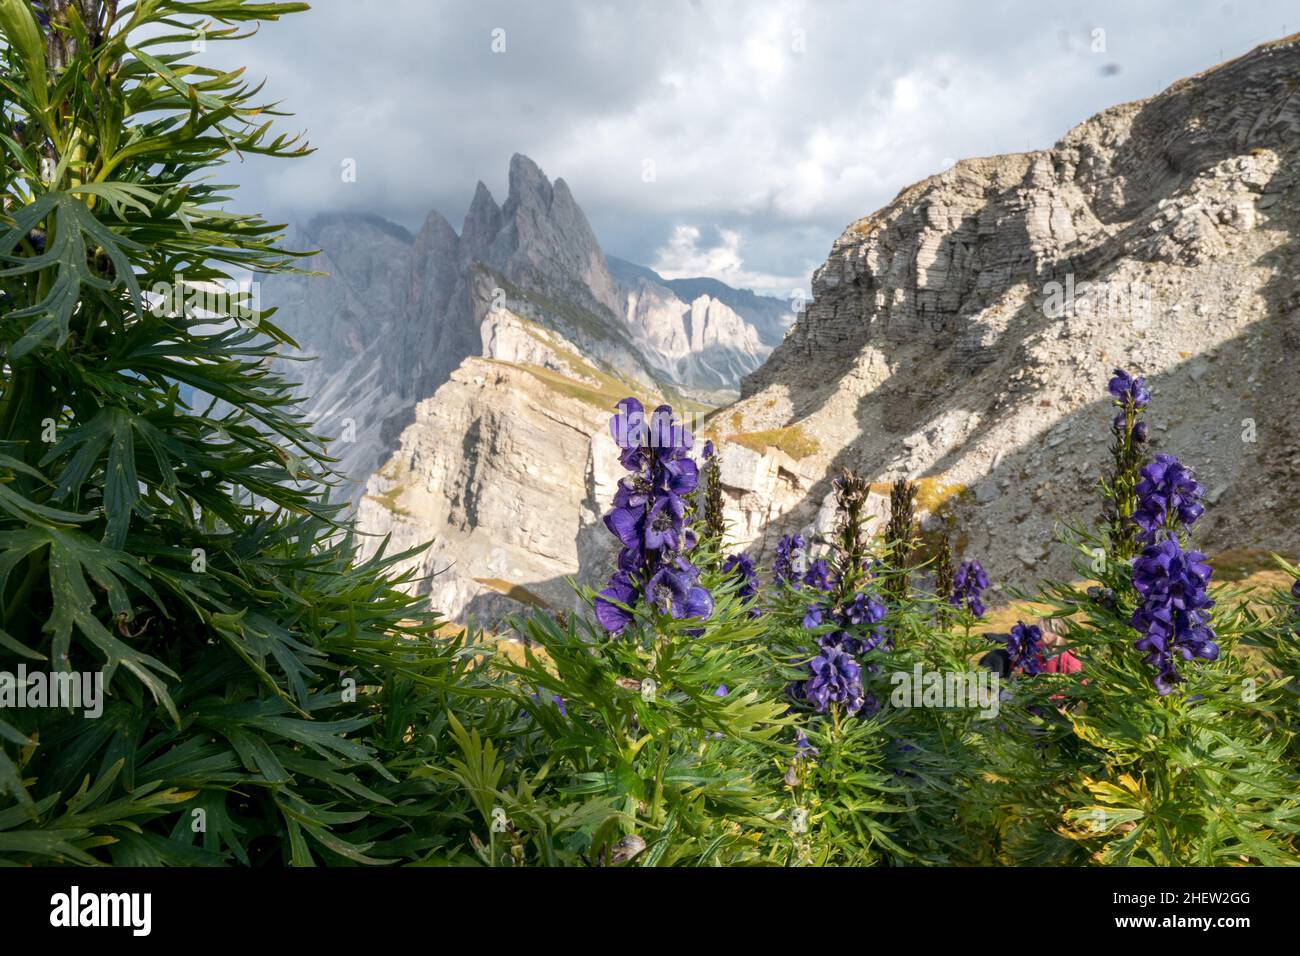 Monkshood flower in bloom, closeup, Seceda mountain peak. Trentino Alto Adige, Dolomites Alps, South Tyrol, Italy, Europe Stock Photo